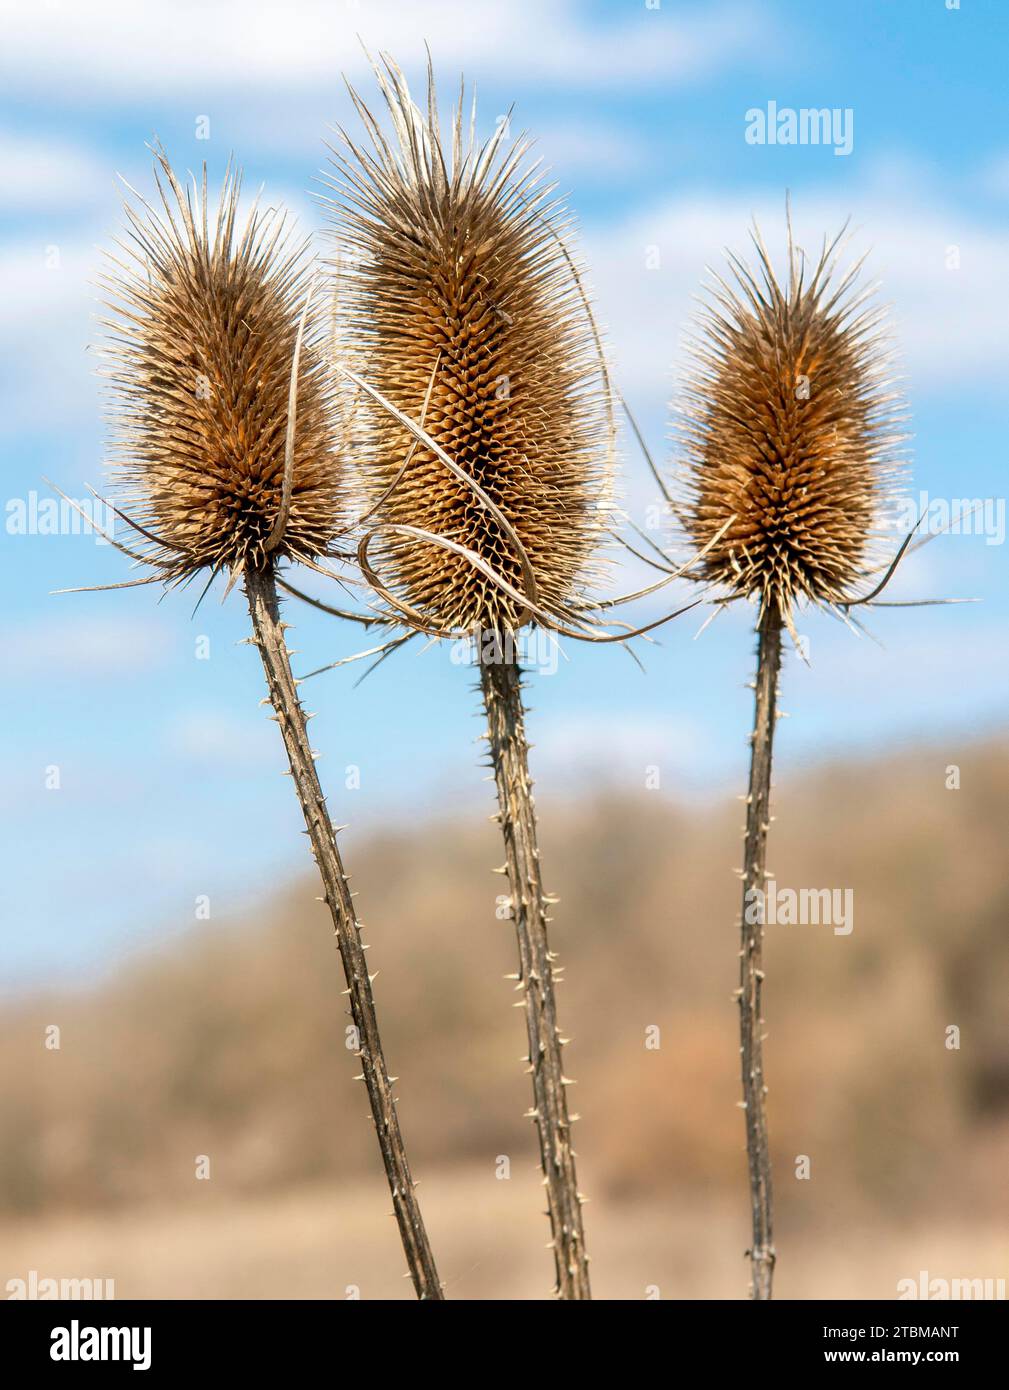 Dry Dipsacus Sativus flowerhead in winter. Indian Teasel (Fuller's teasel) Thistle macro. Close up Stock Photo